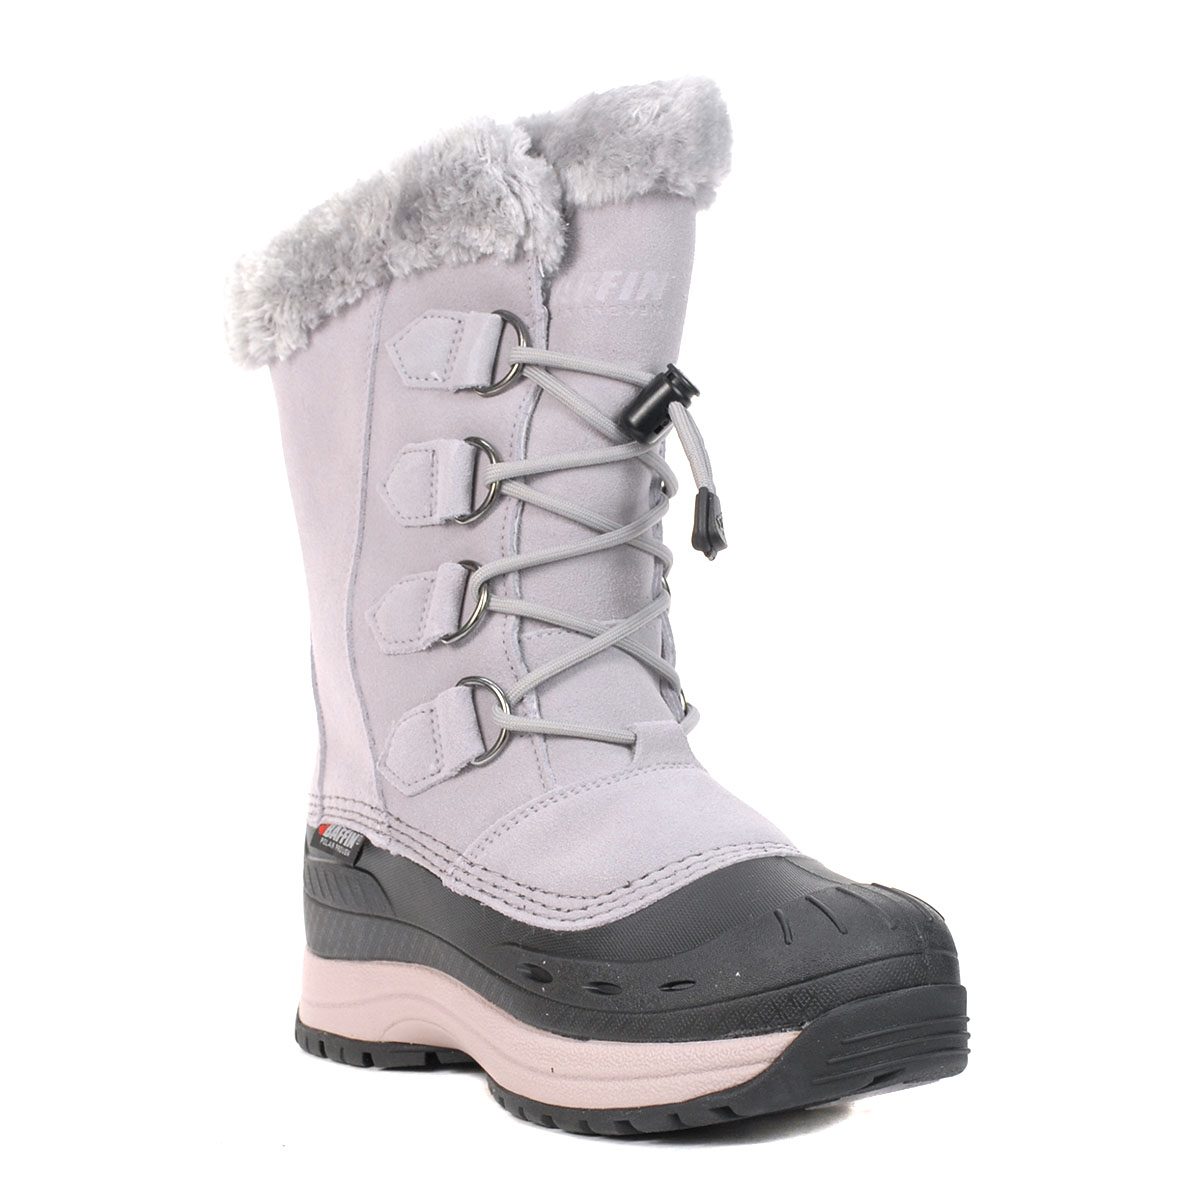 Bottes de neige Chloé femme Baffin - Chaussures hiver - Inuka